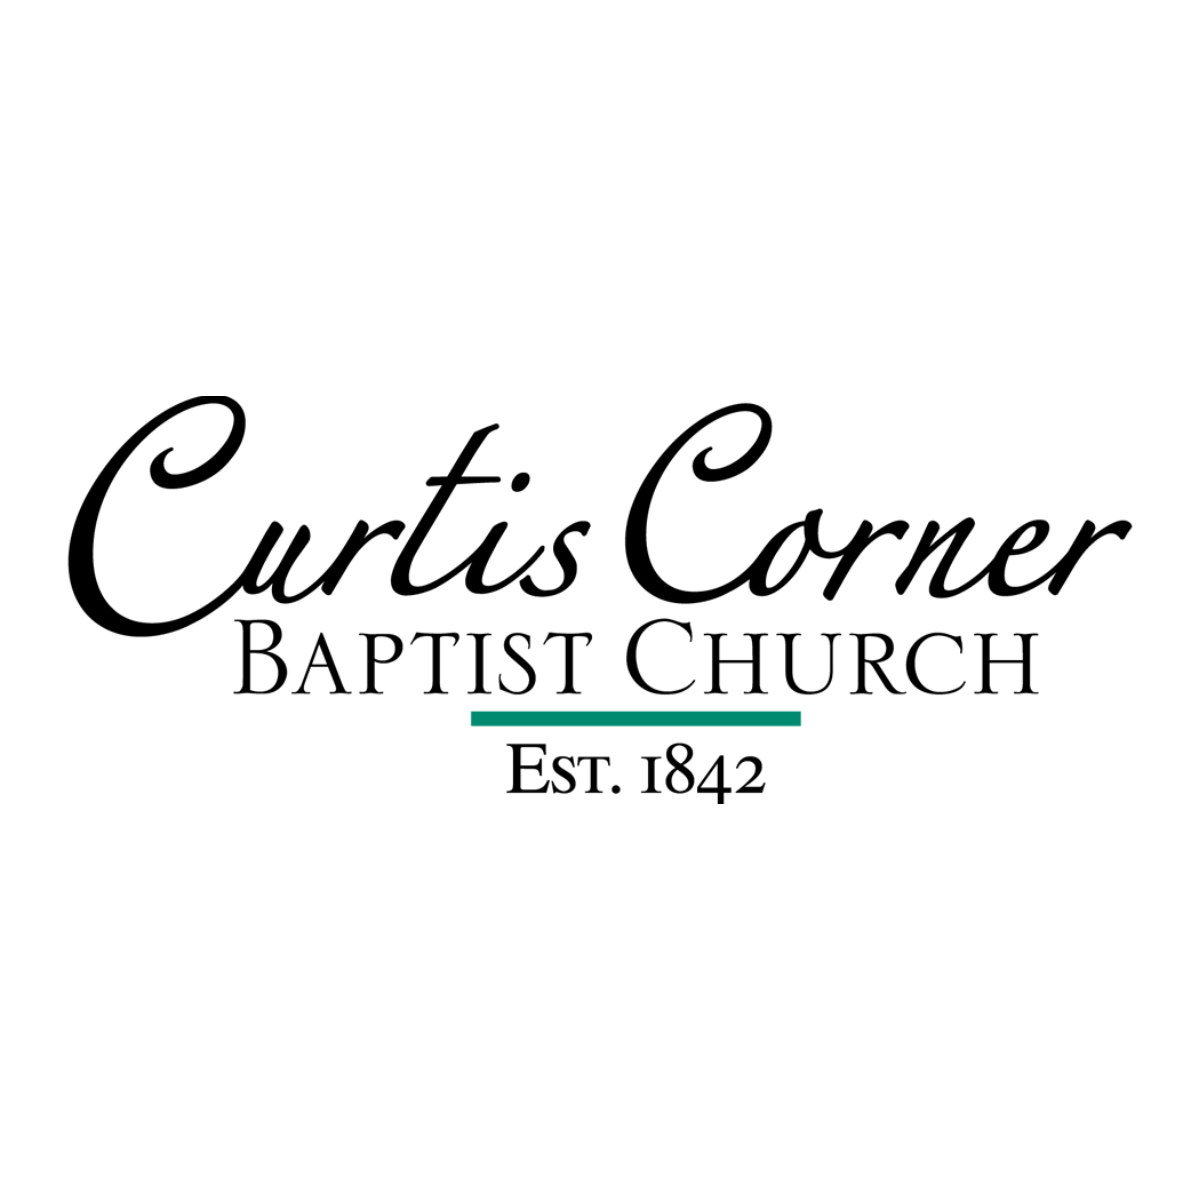 Curtis Corner Baptist Church